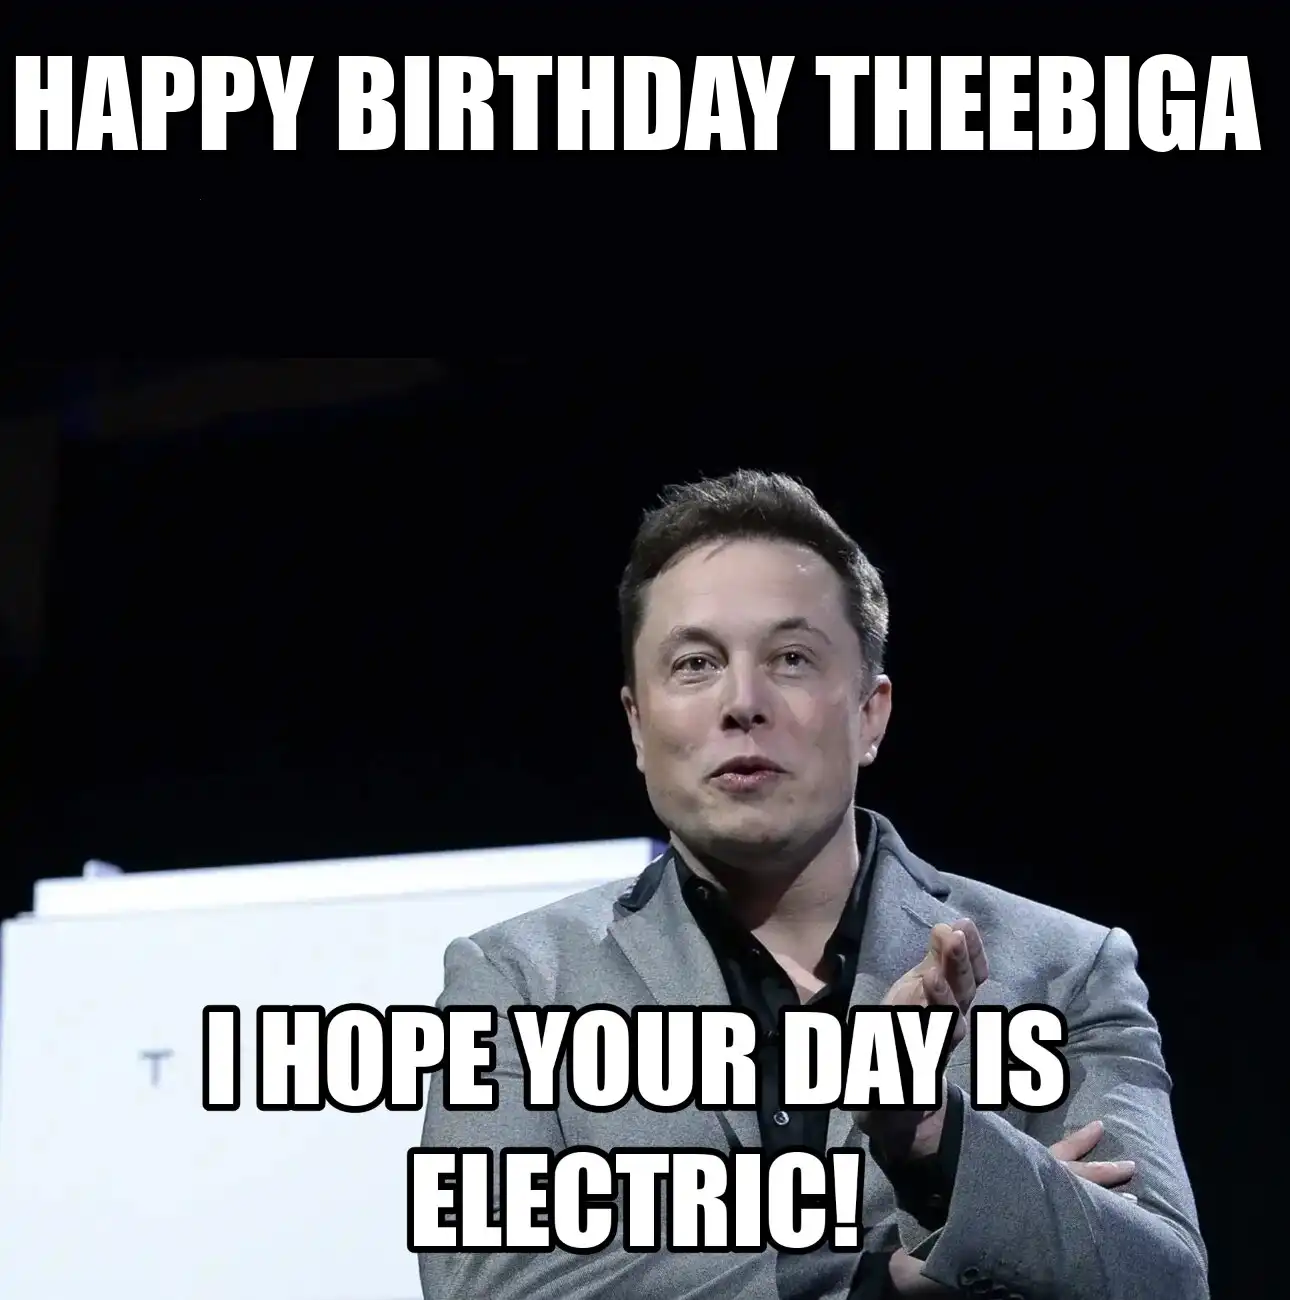 Happy Birthday Theebiga I Hope Your Day Is Electric Meme